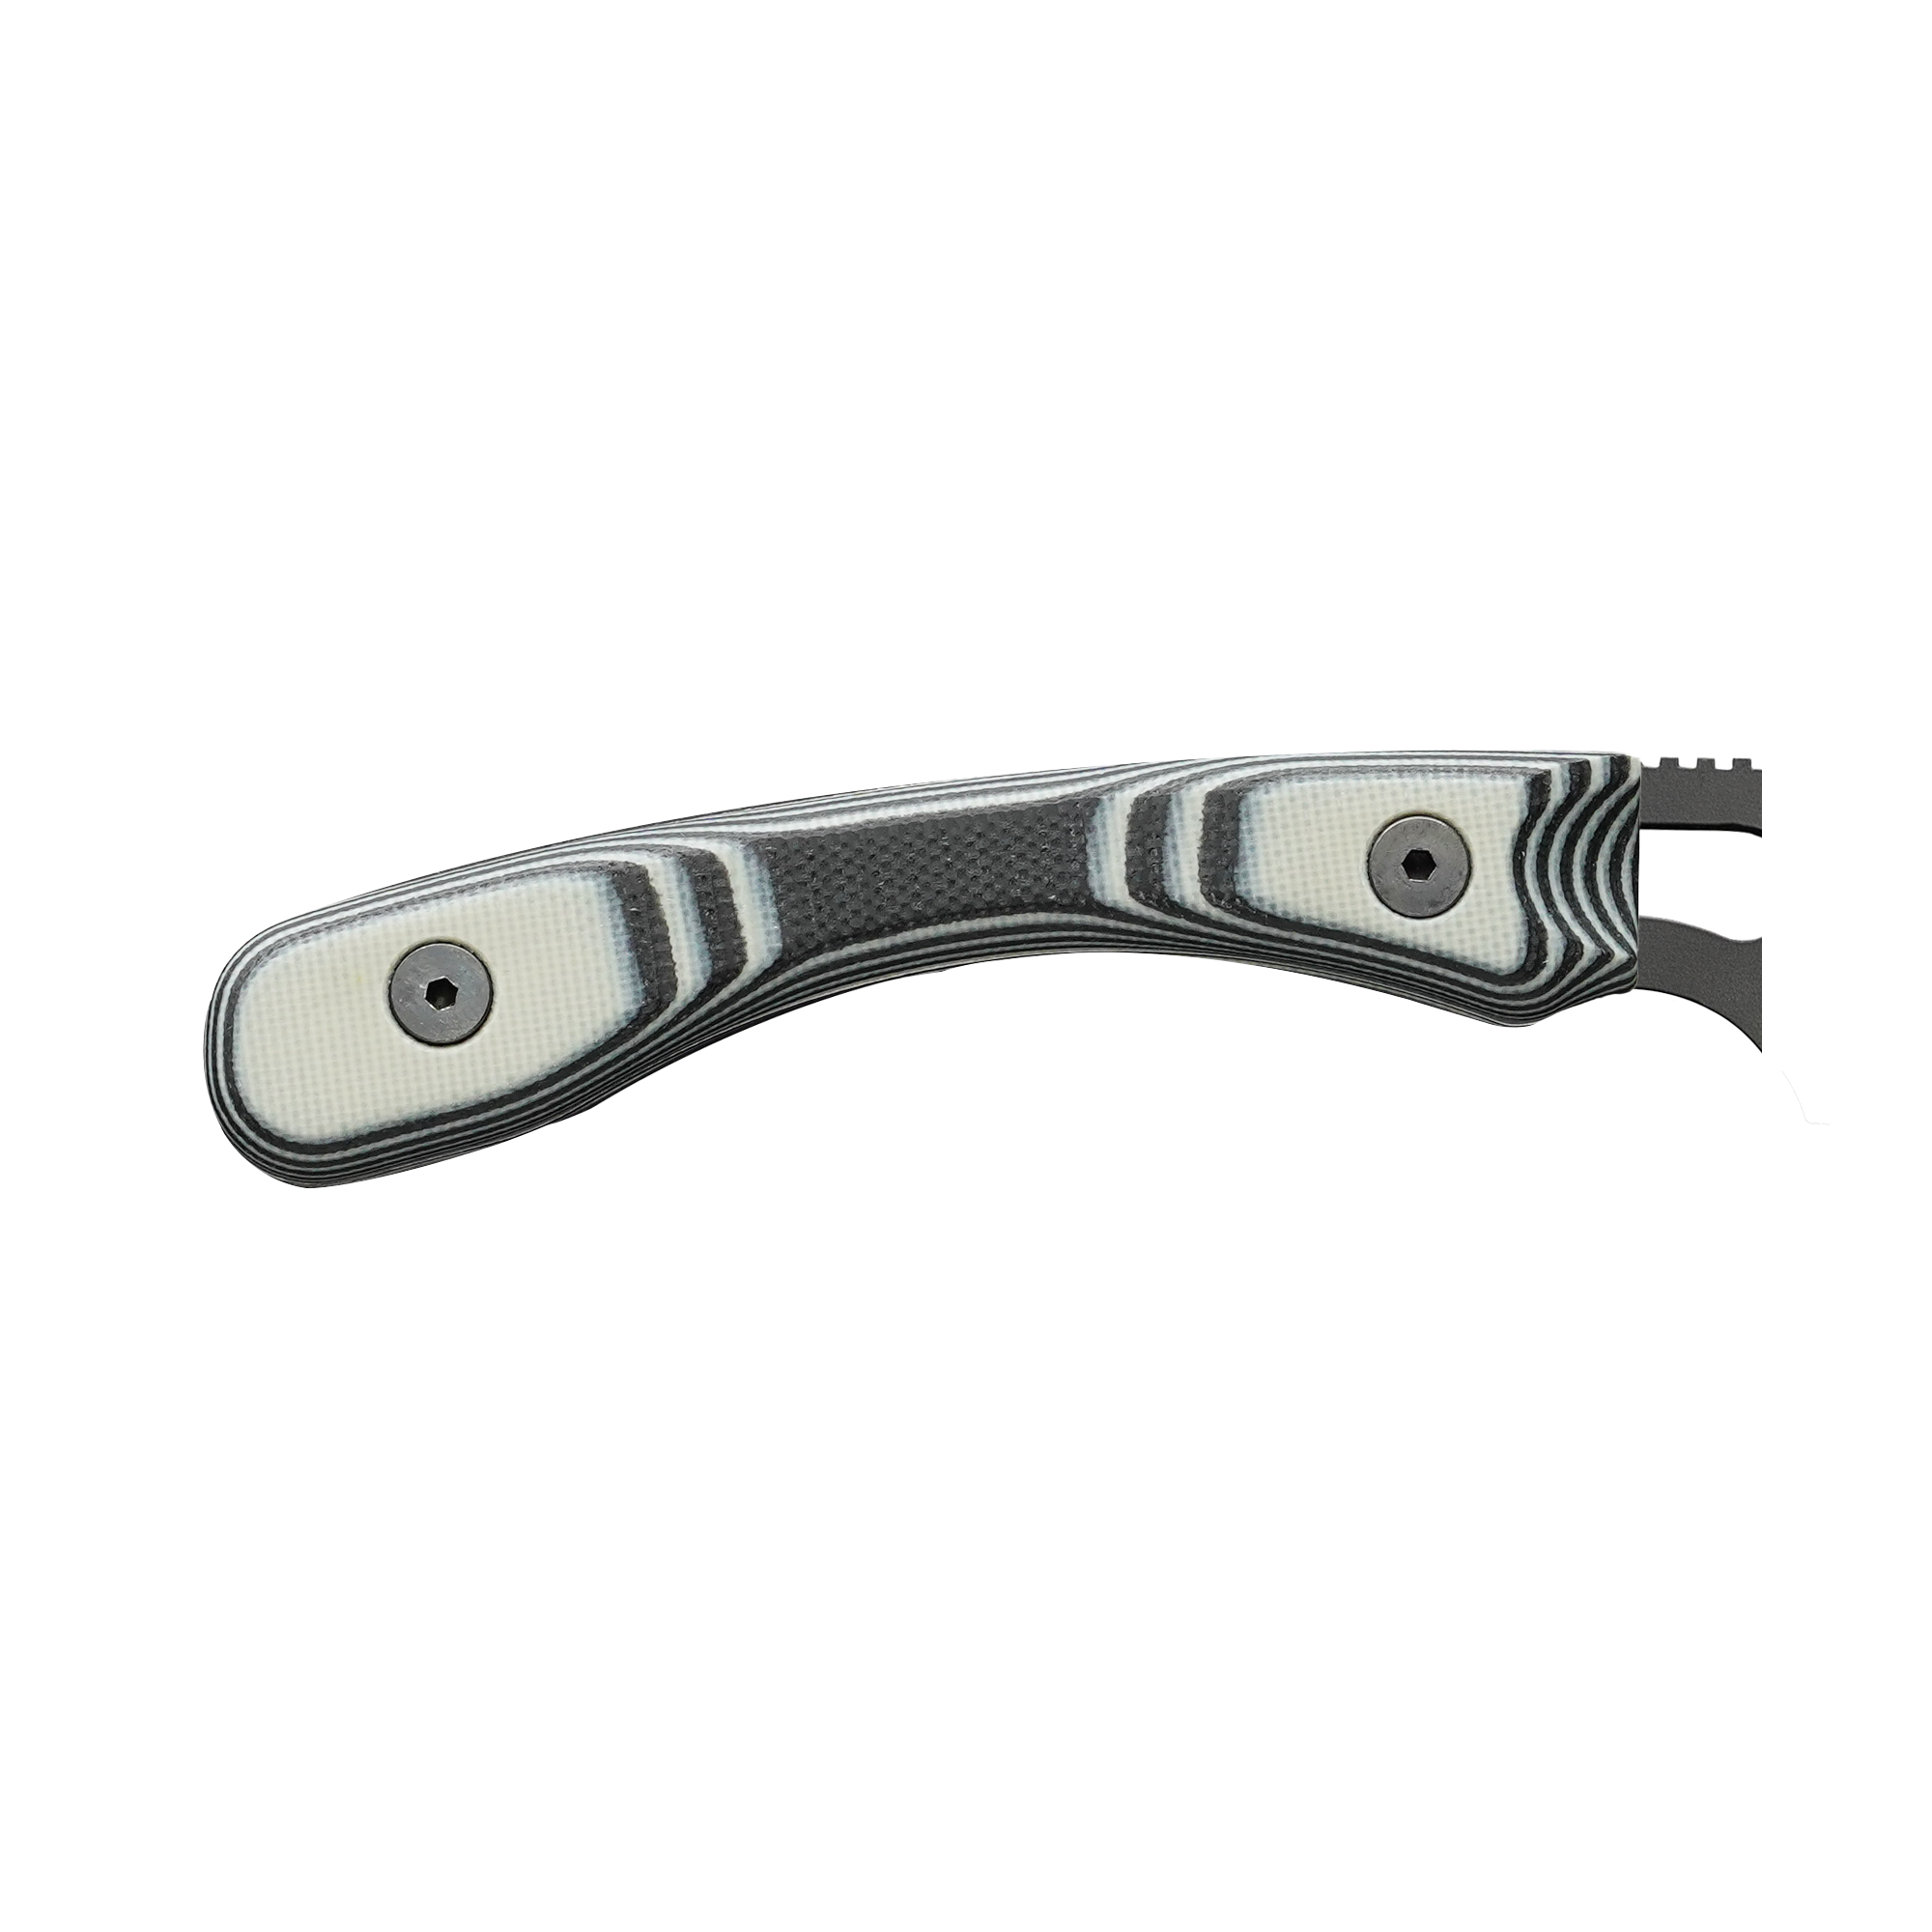 Iron Will K1 Ultralight Hunting Knife Review - Rokslide